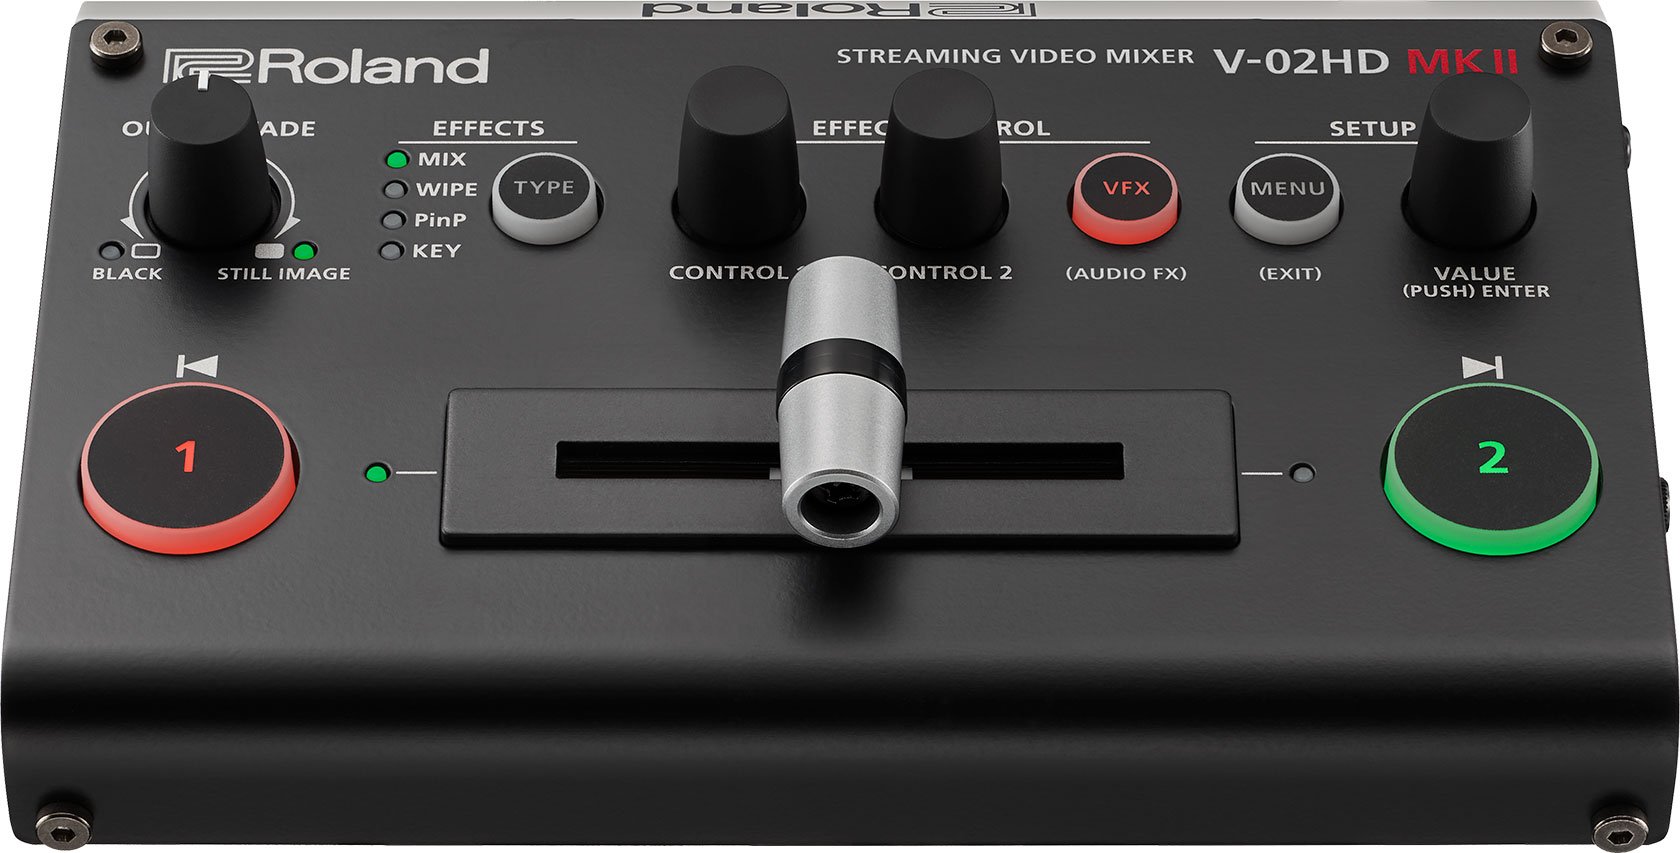 Roland Professional A/V V-02HD-MKII